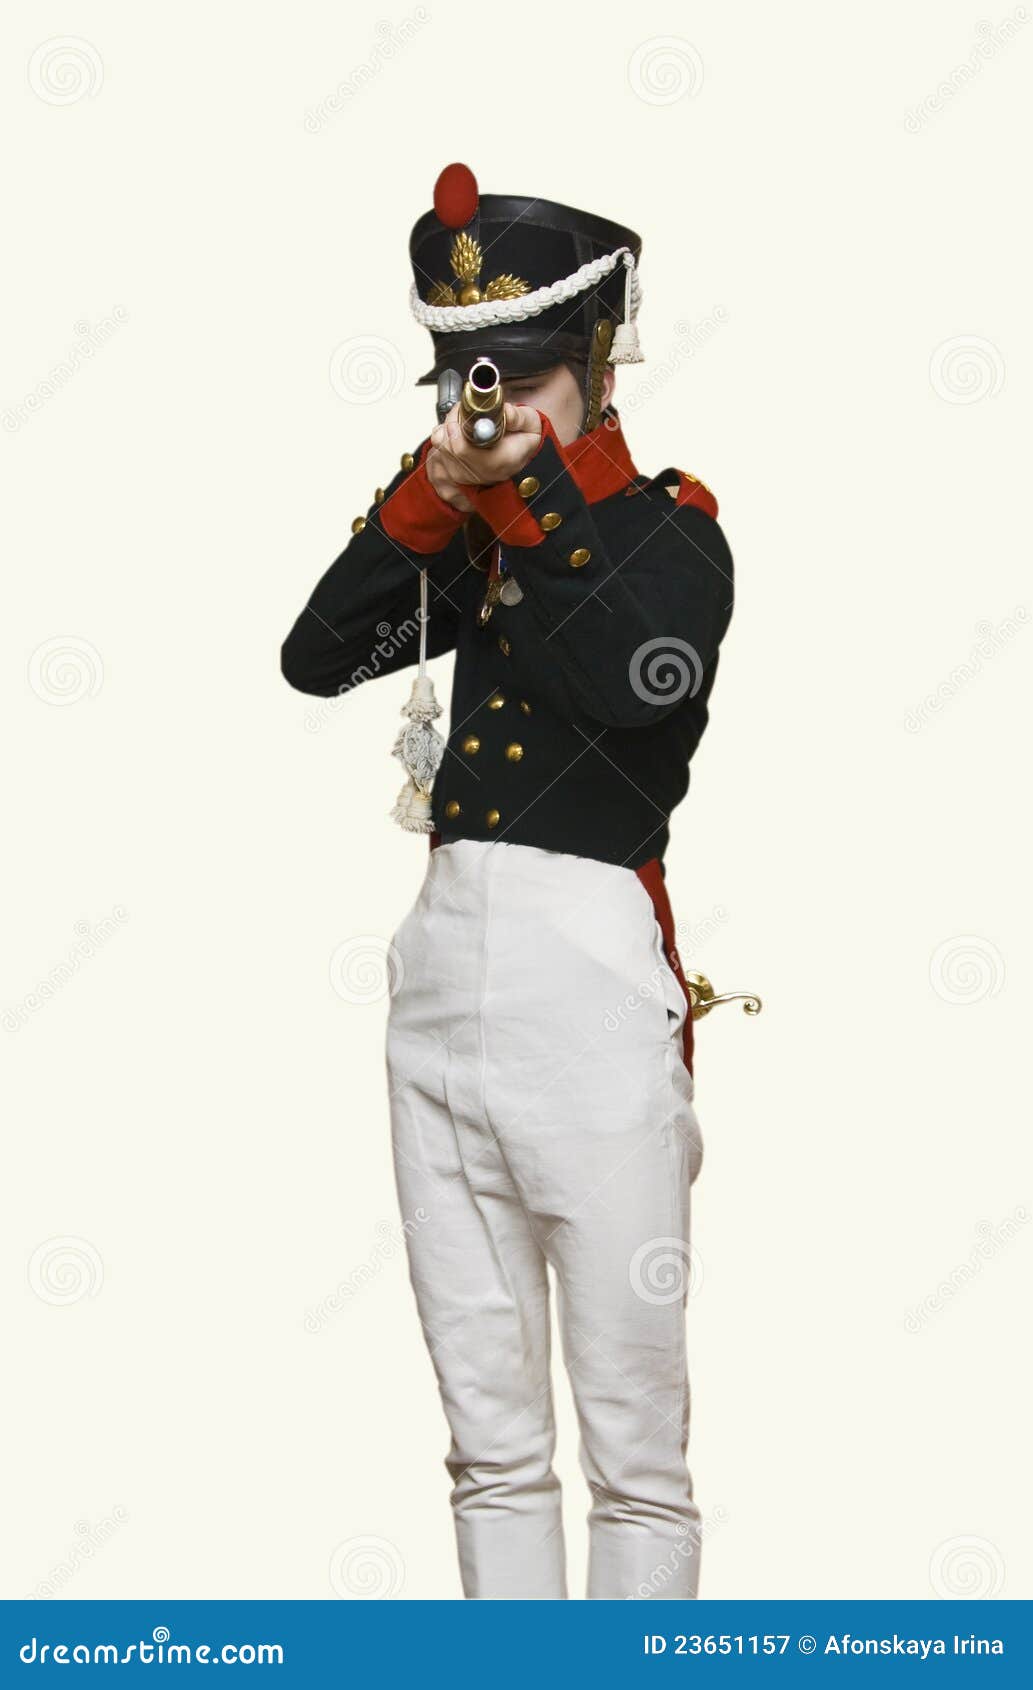 Boy in Uniform of Soldier in XIX Century Stock Image - Image of dress ...